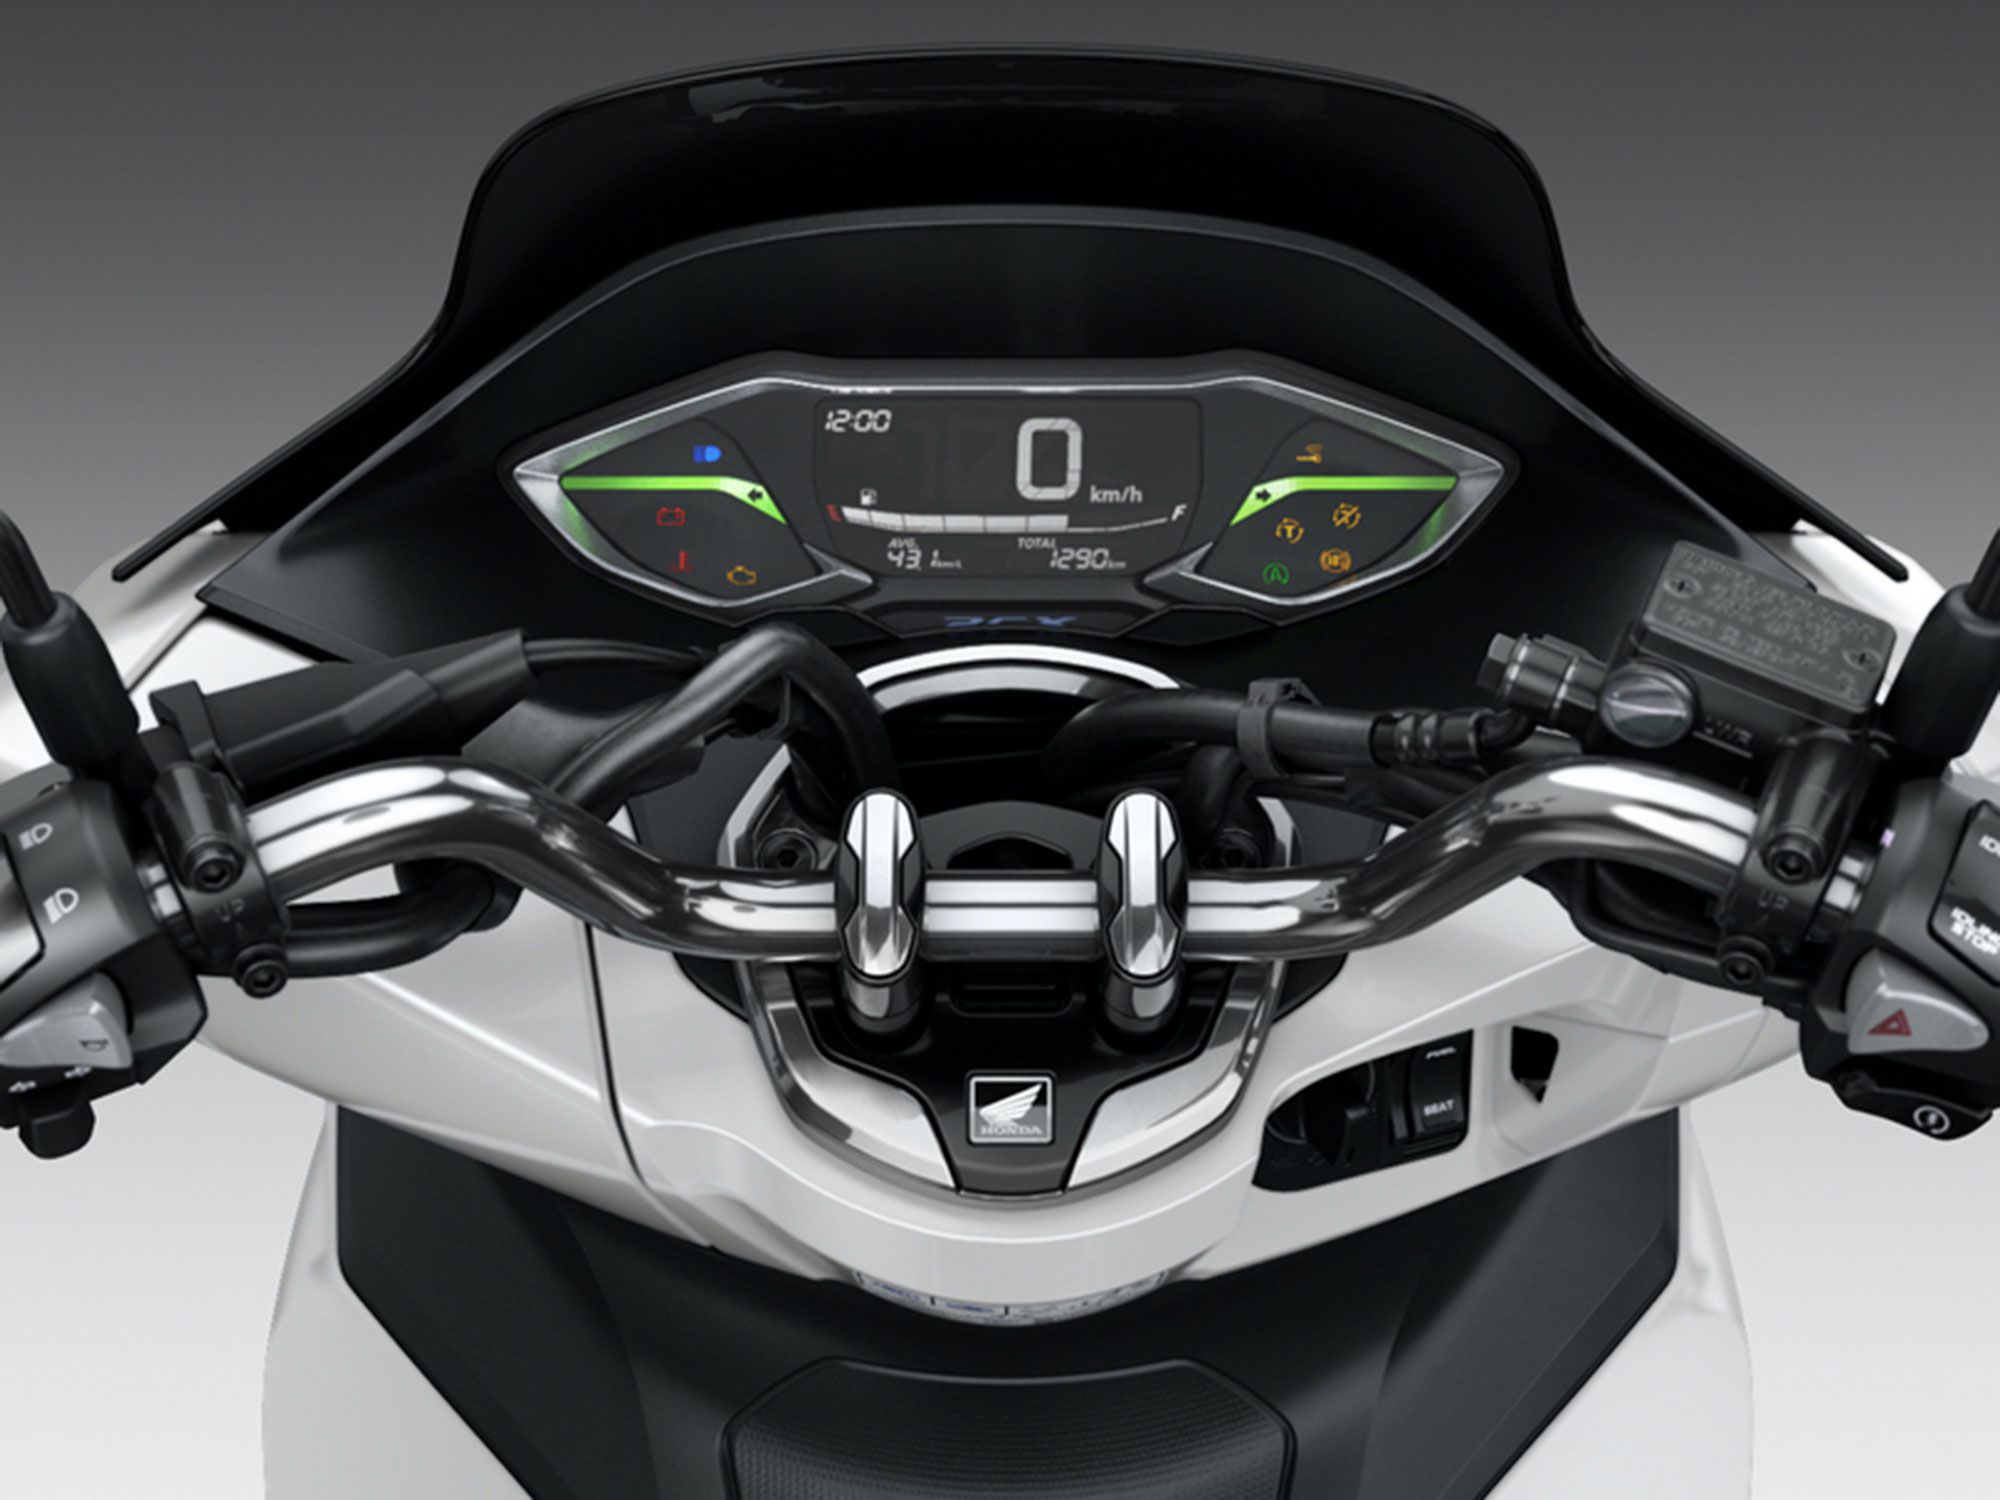 2021 Honda PCX First Look | Cycle World